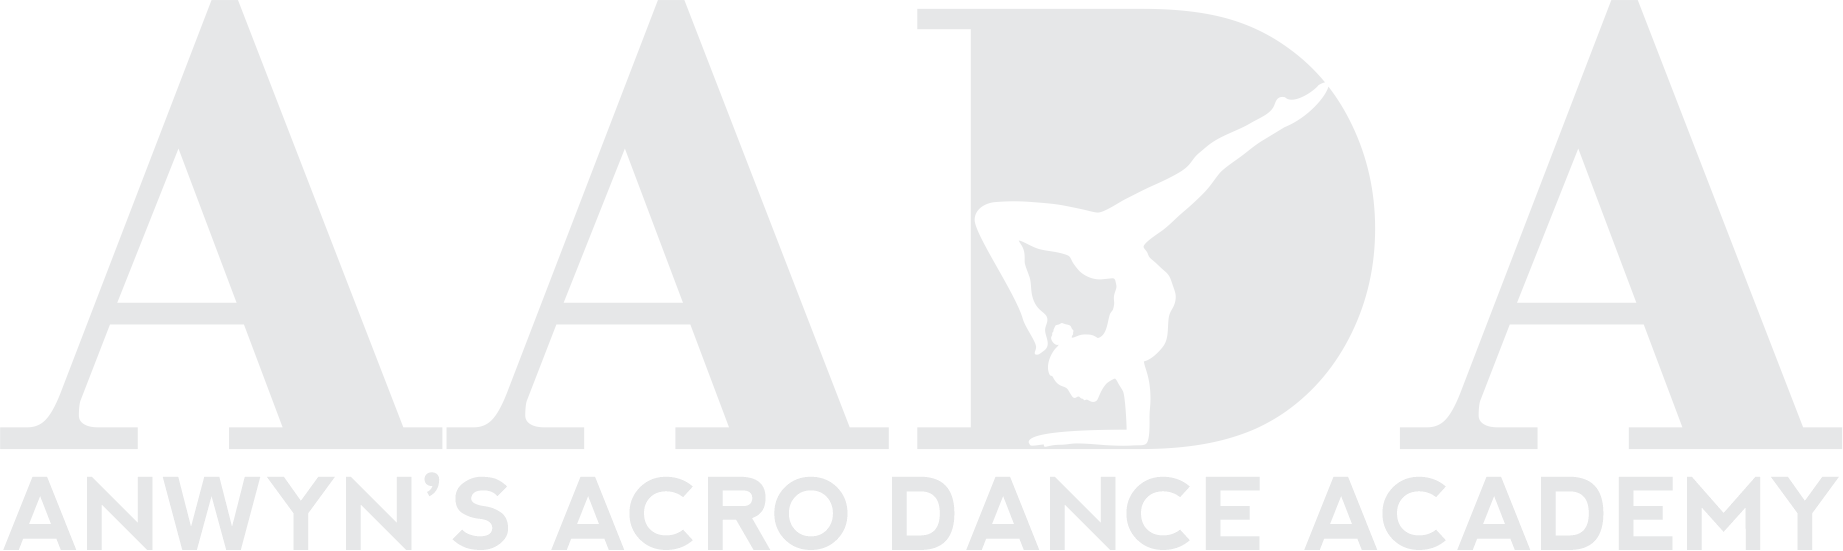 Anwyn's Acro Dance Academy